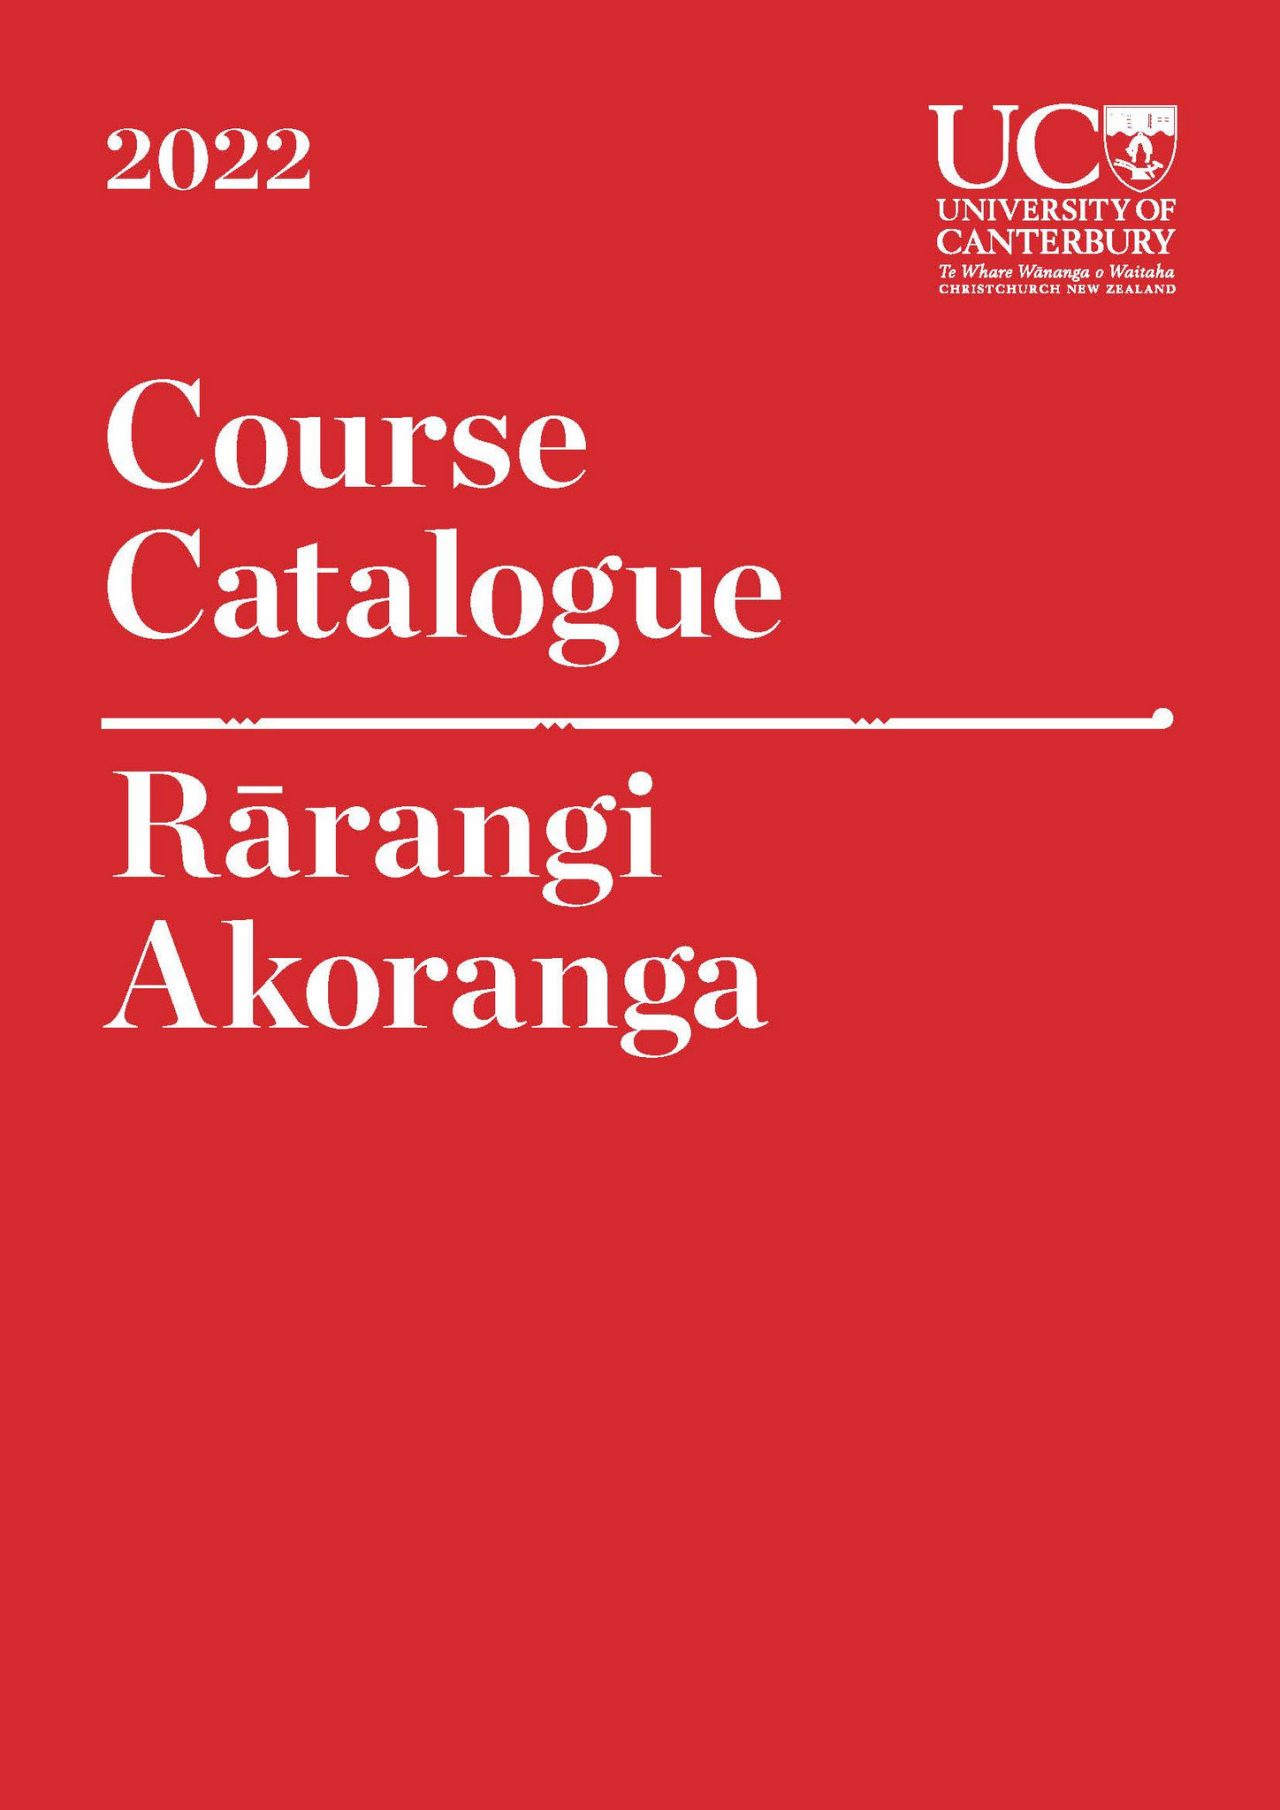 UC Cource Catalogue 2022